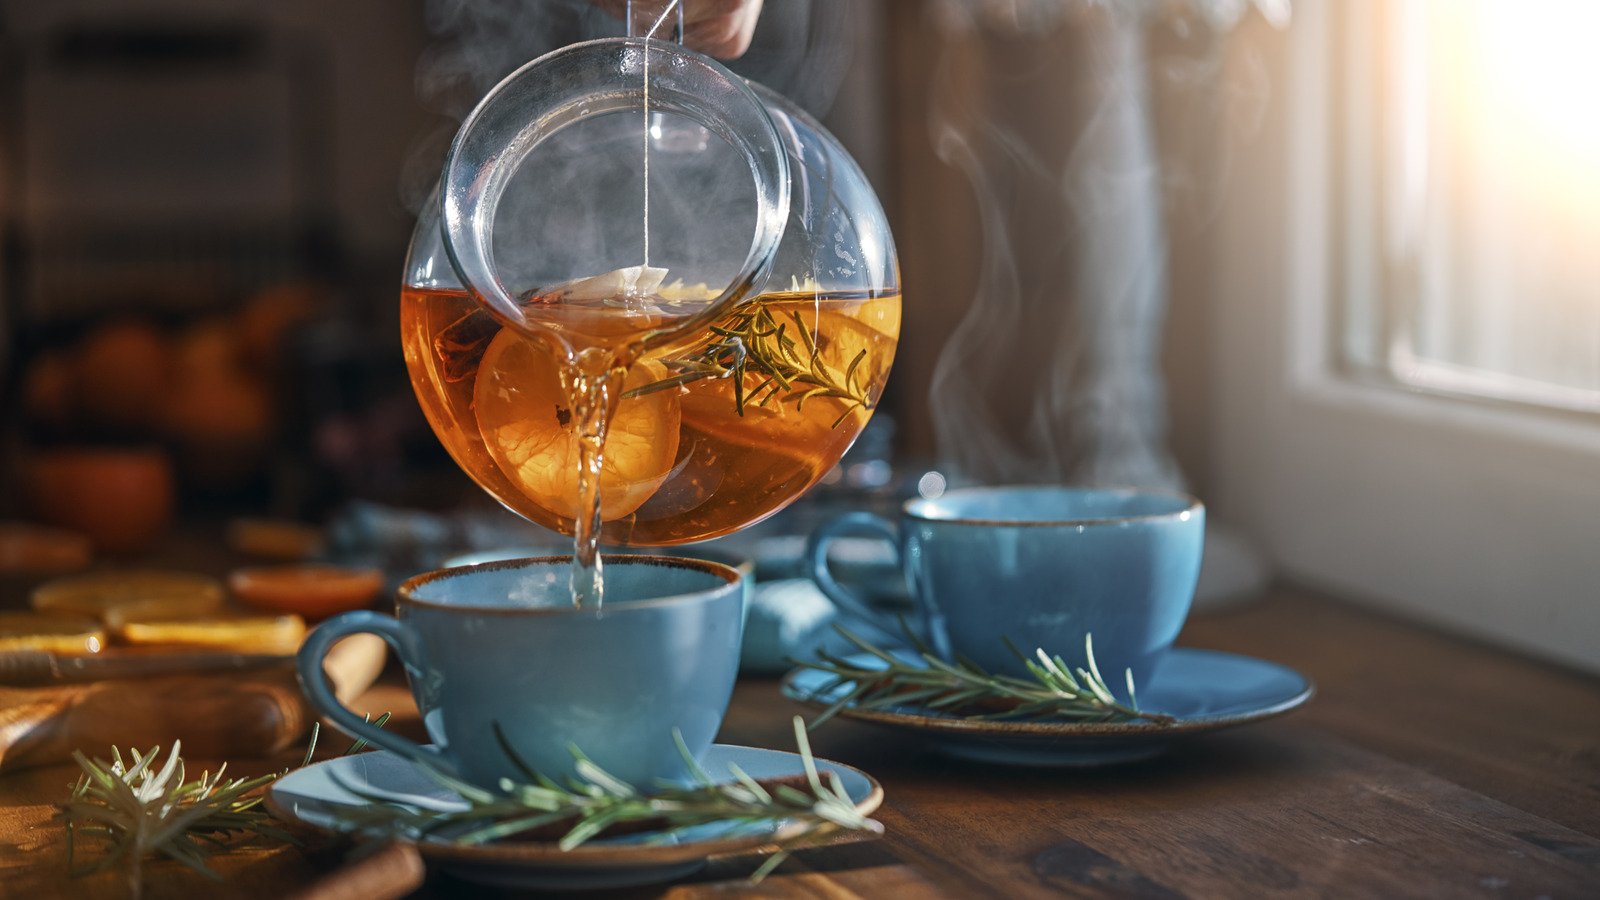 Heating method of kettle affects the taste of tea